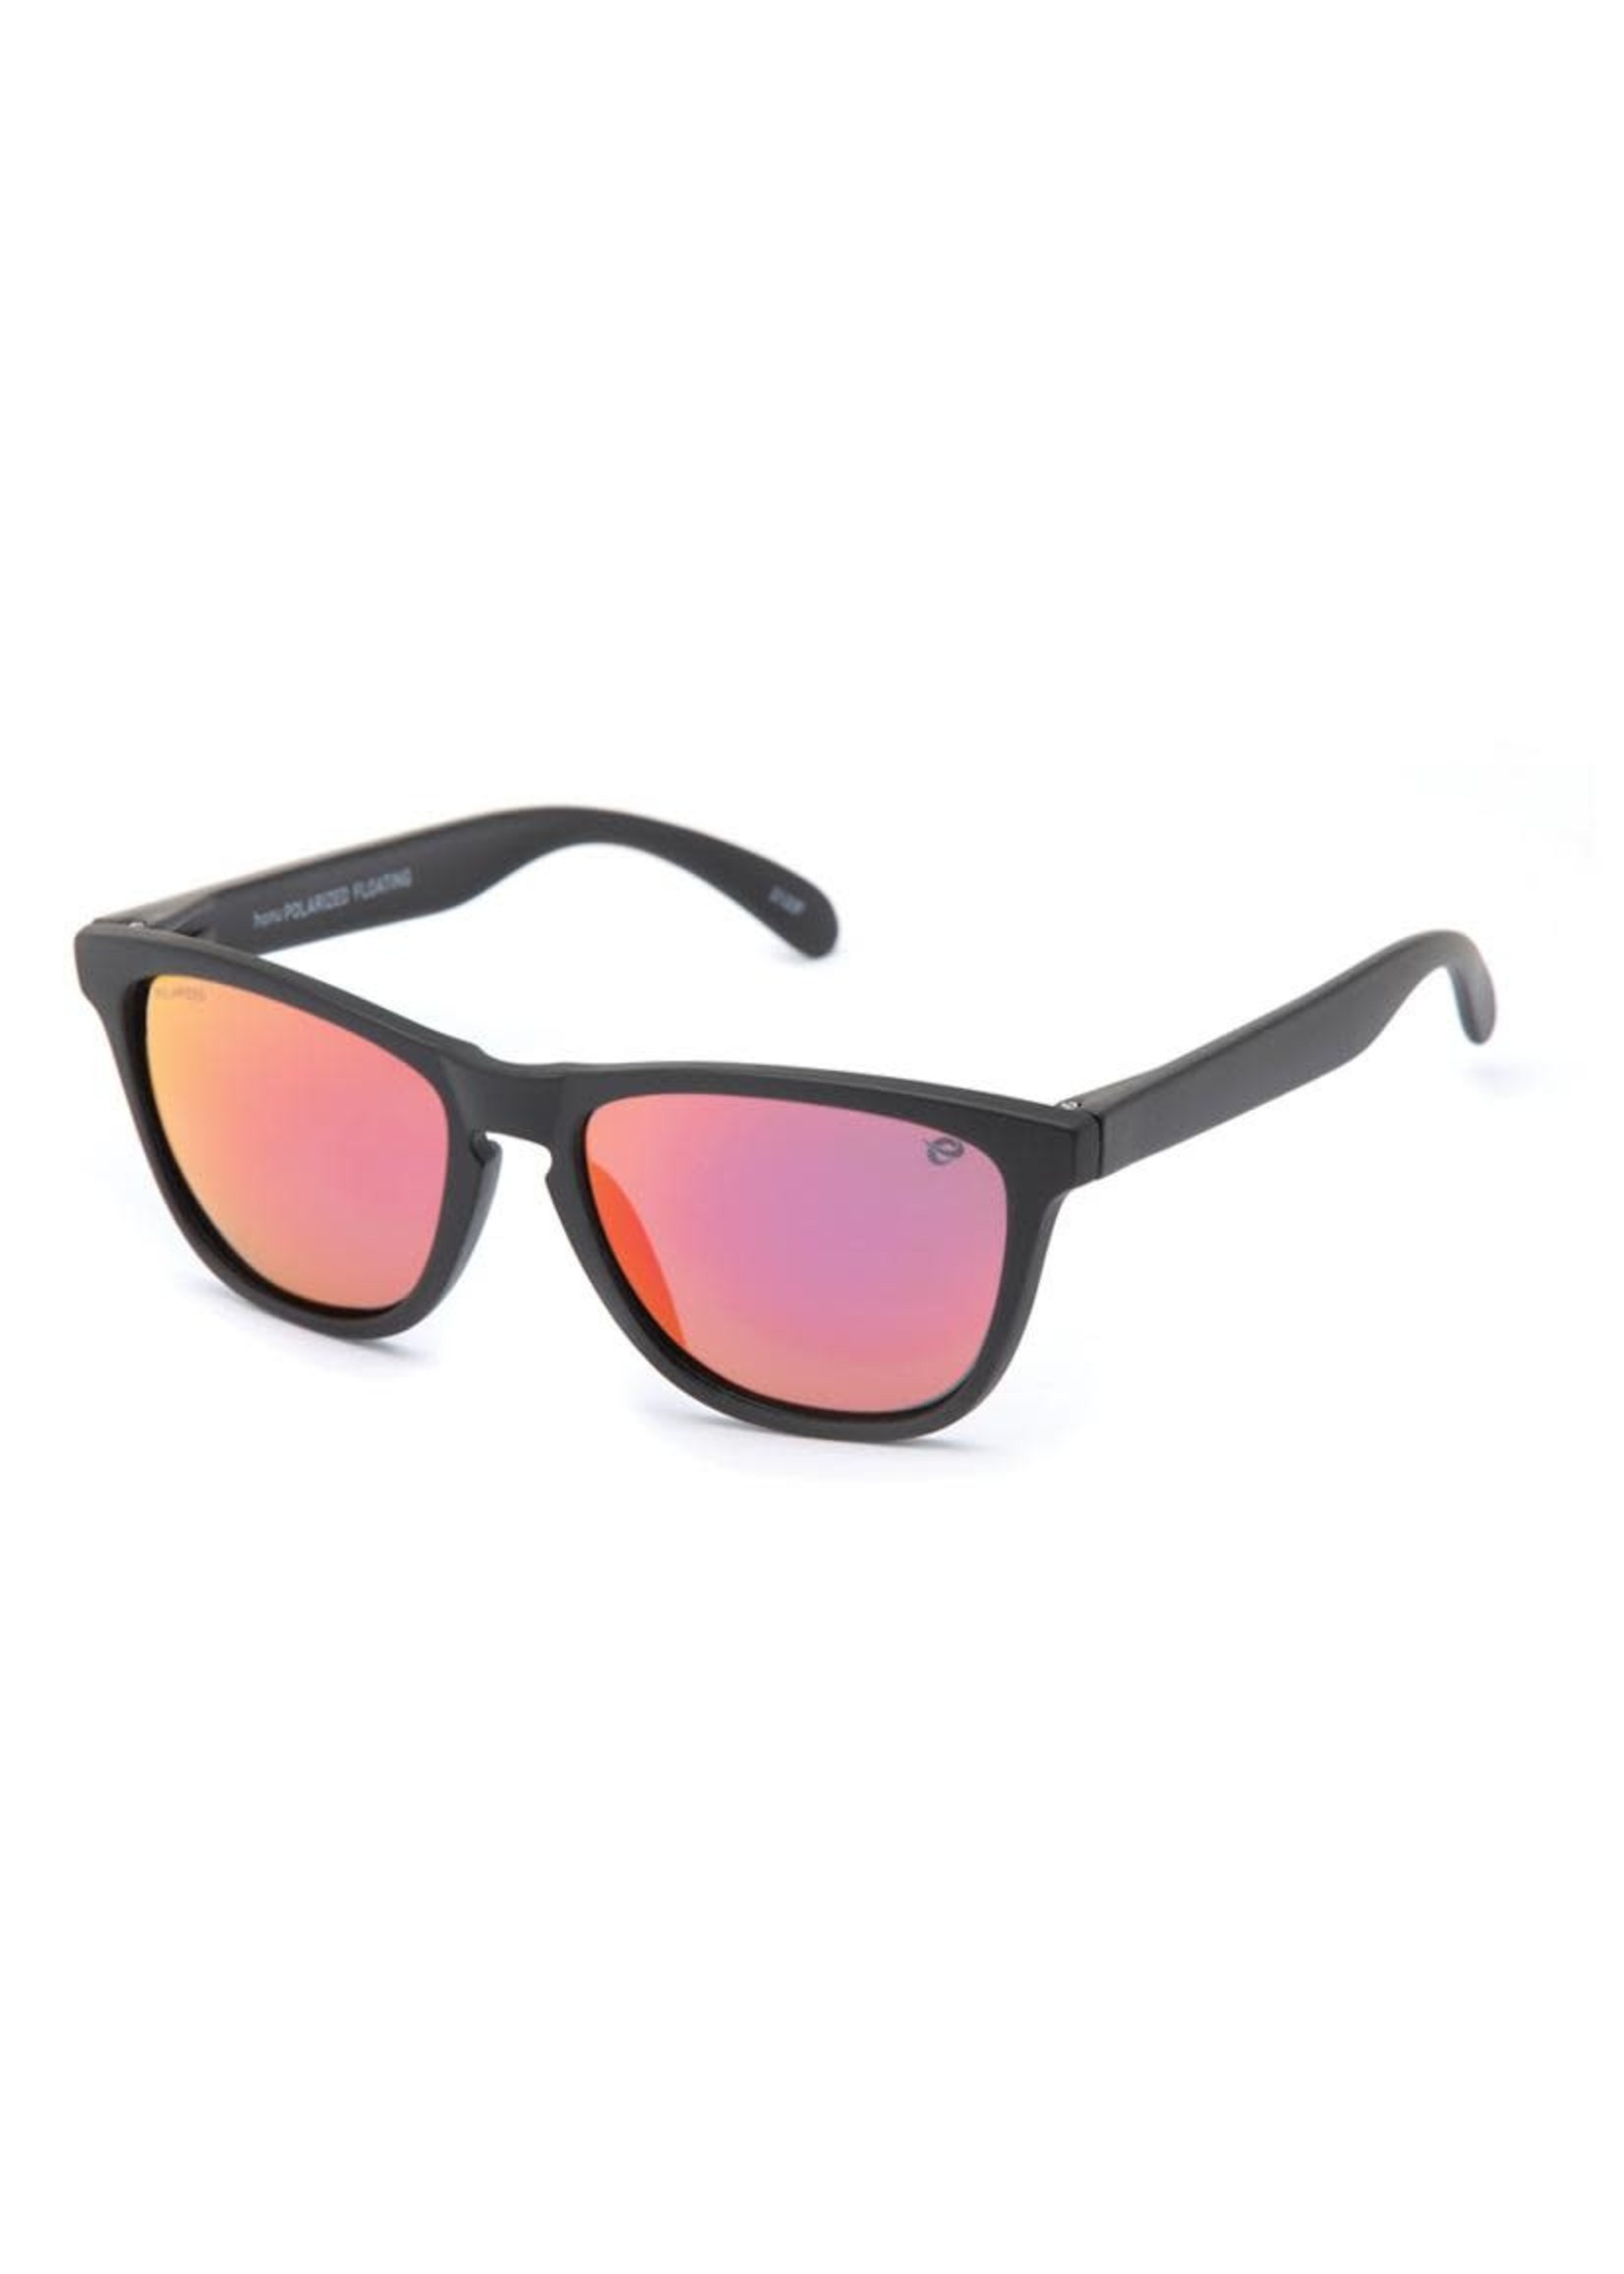 Urban Element Urban Element Premium Sport Sunglasses Women's Honu